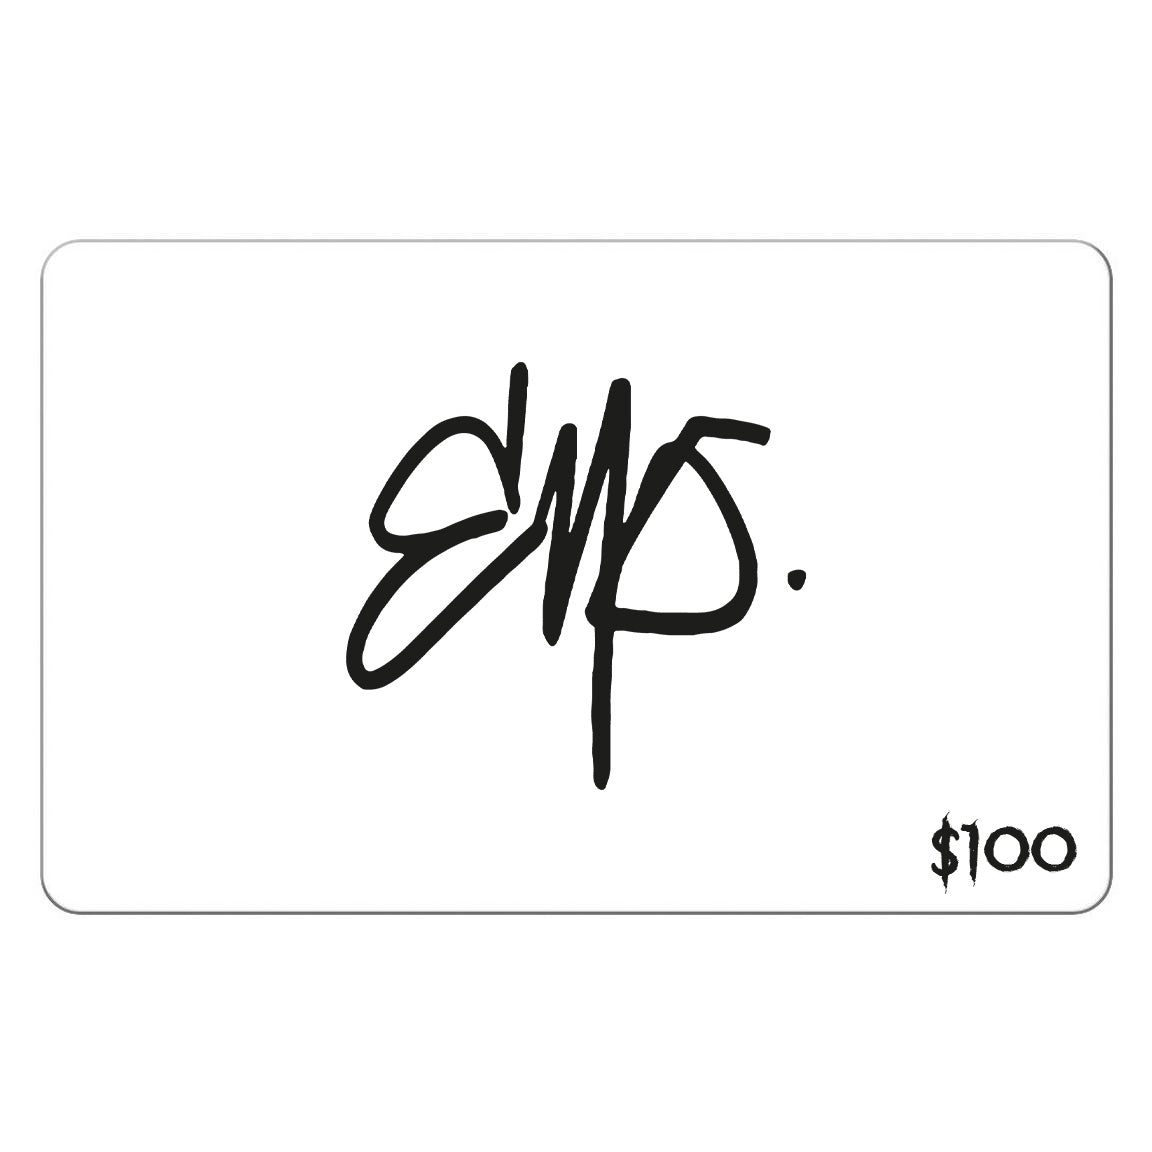 END signature logo gift card - $100